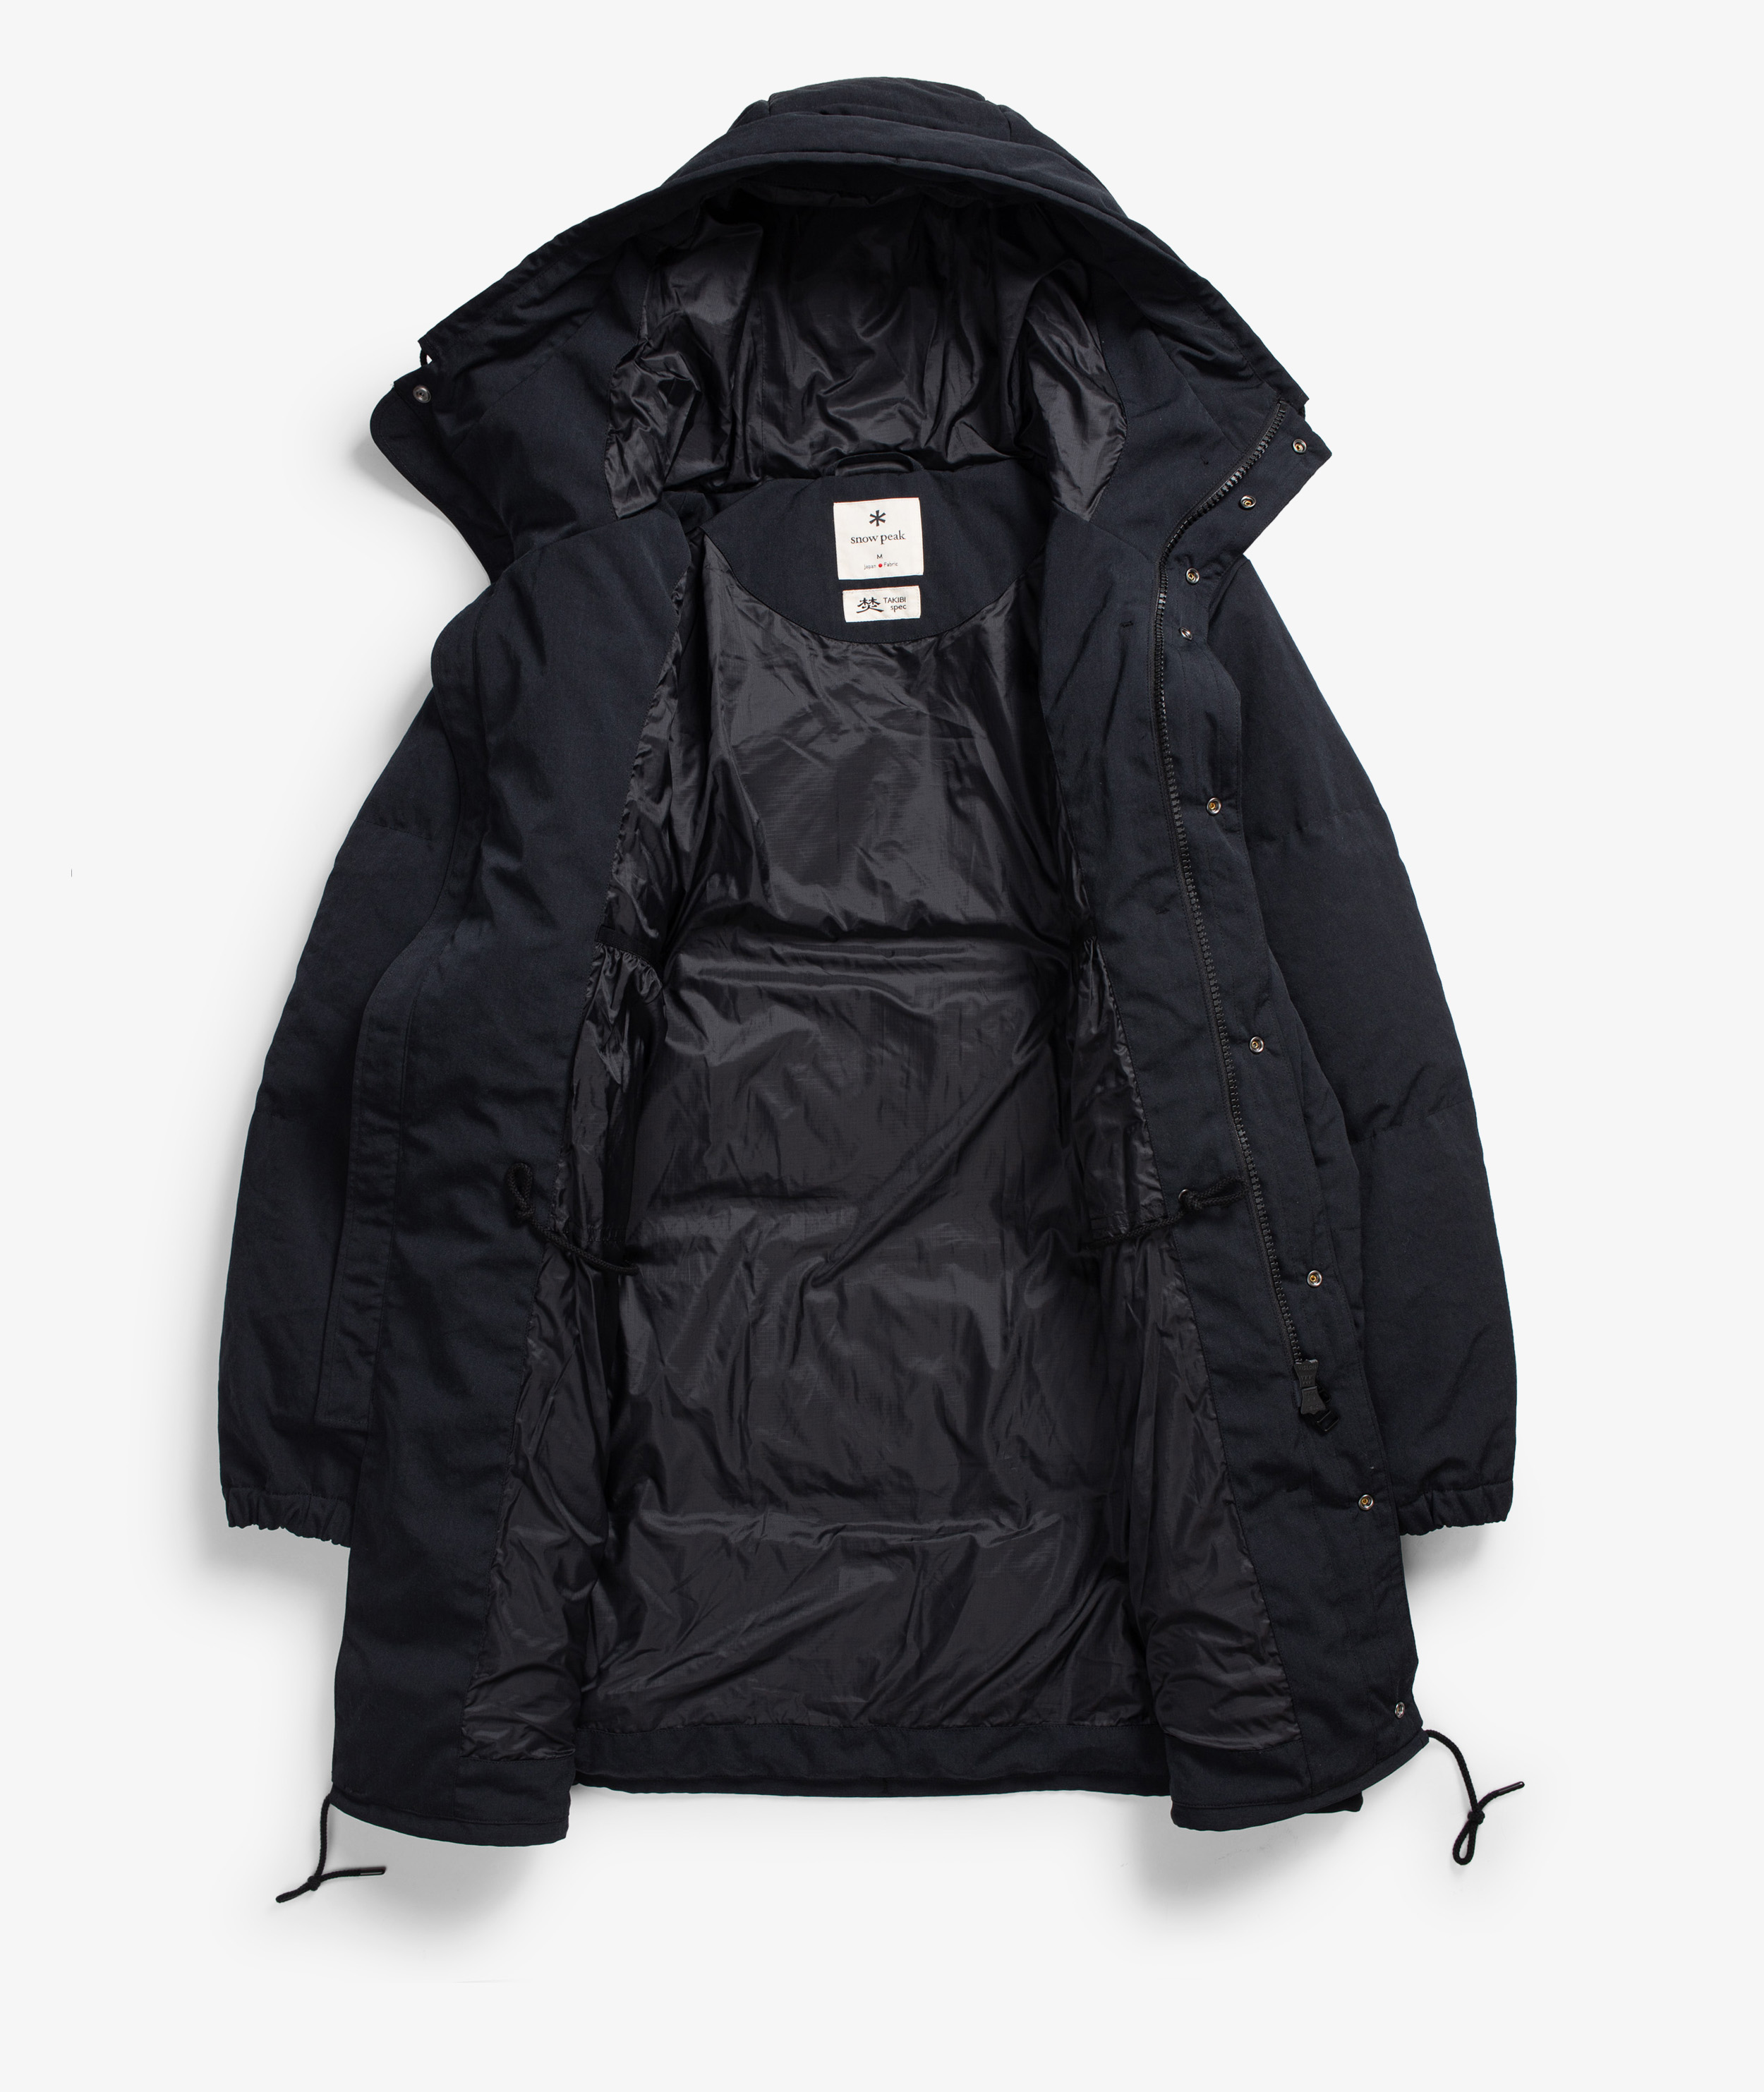 Norse Store | Shipping Worldwide - Snow Peak TAKIBI Down Coat - Black